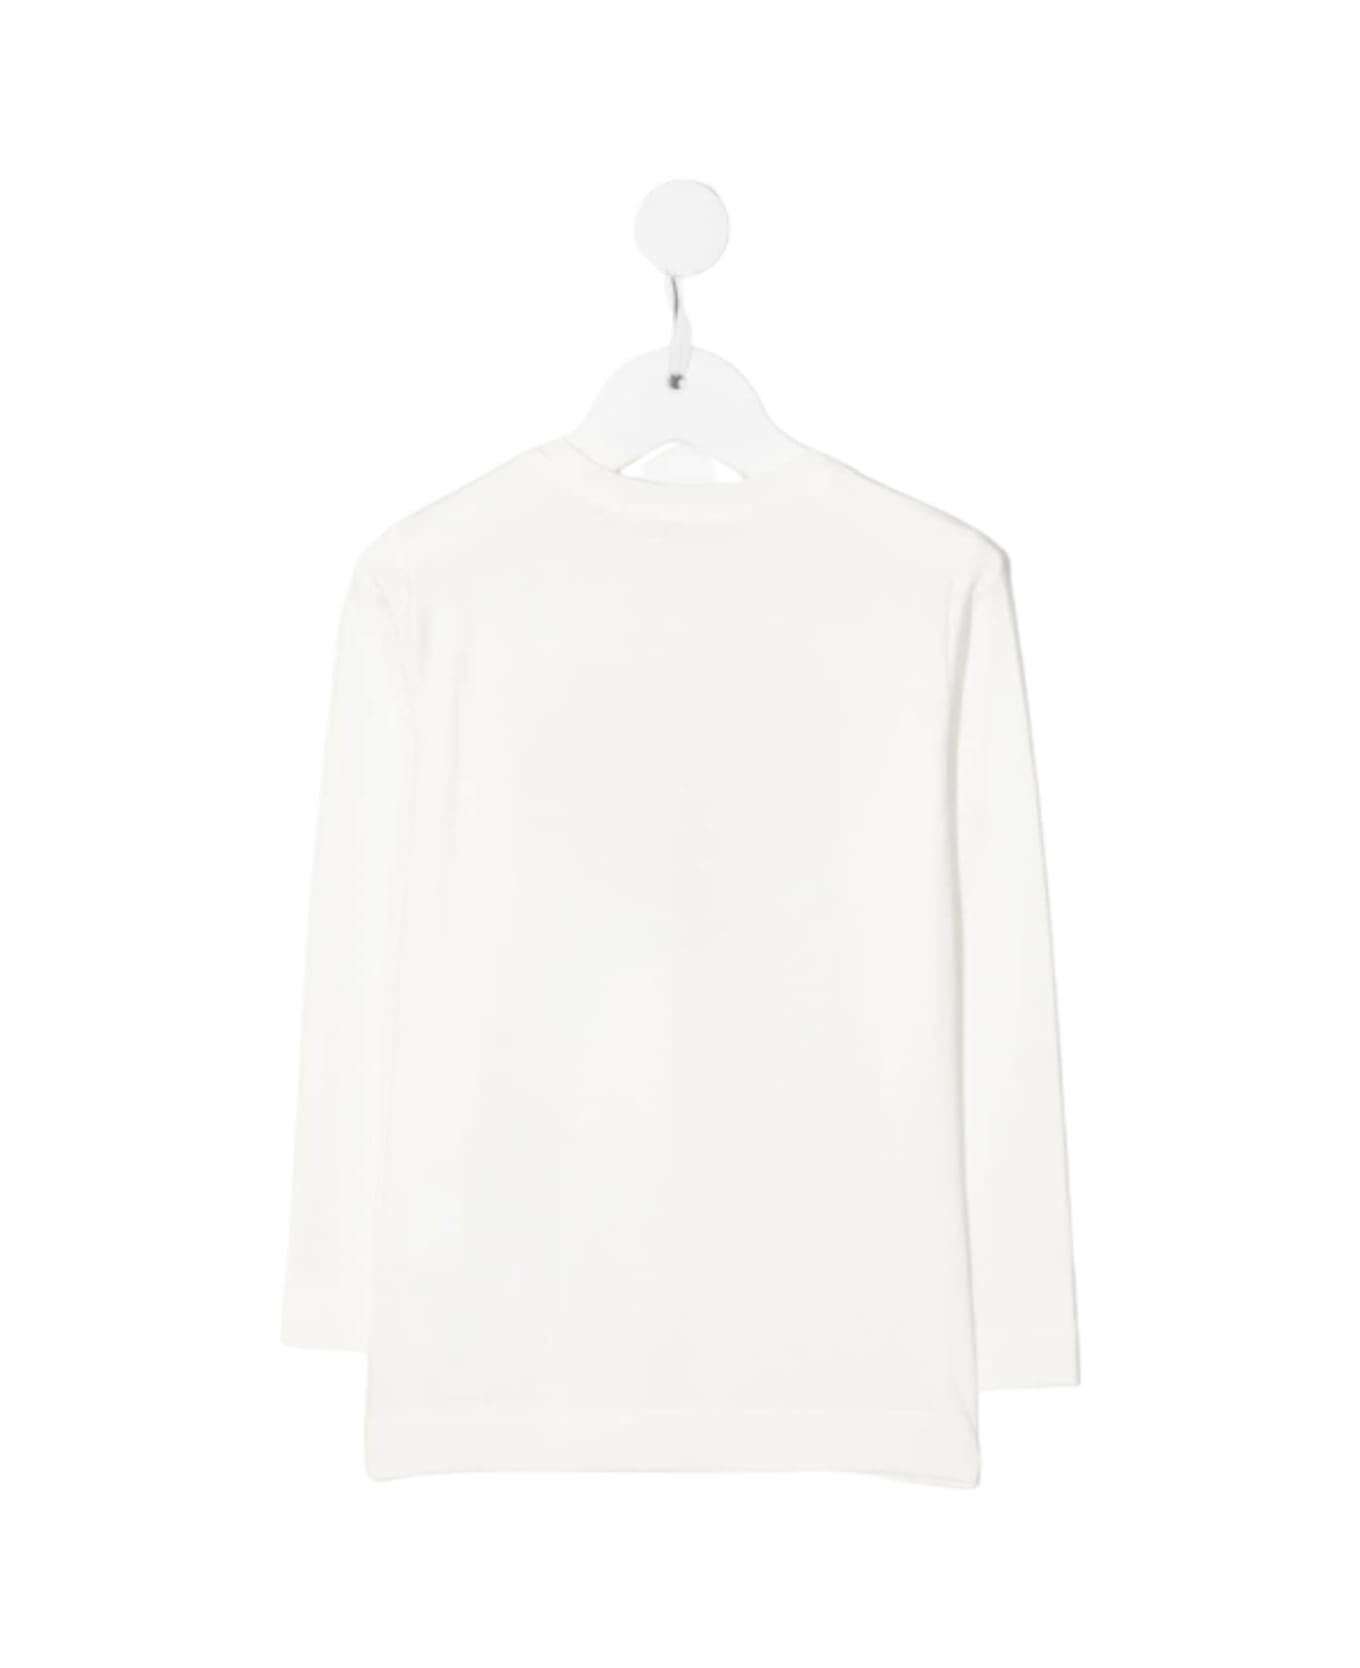 Monnalisa T-shirt Orsetta
Strass In Jersey
Stretch - White